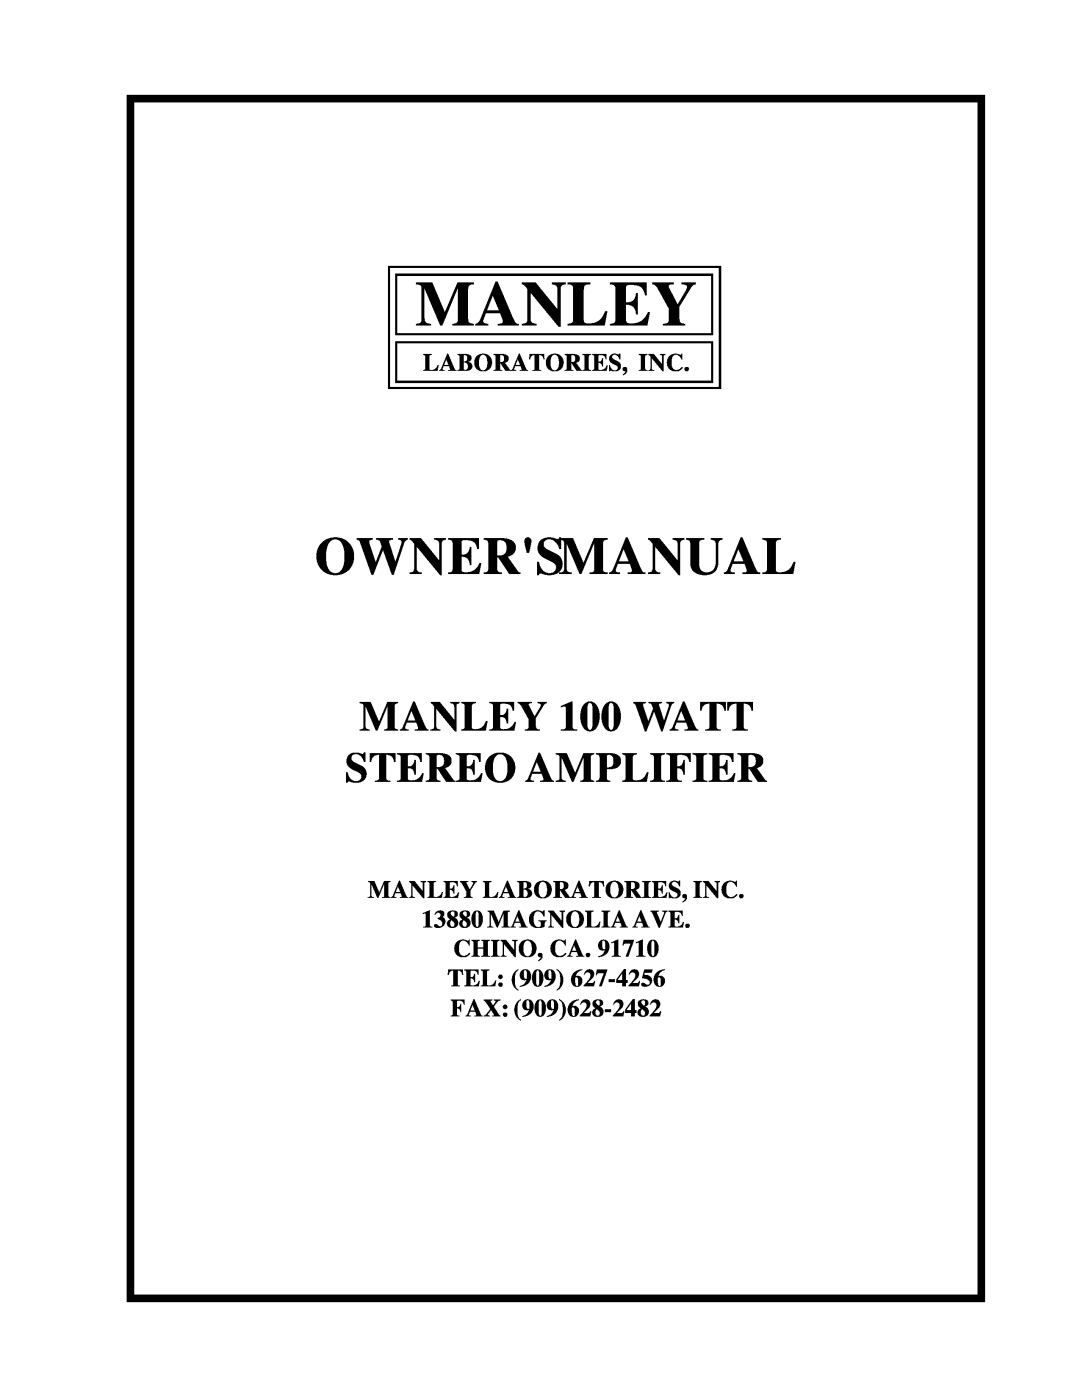 Manley Labs owner manual Manley, Ownersmanual, MANLEY 100 WATT STEREO AMPLIFIER, Laboratories, Inc 